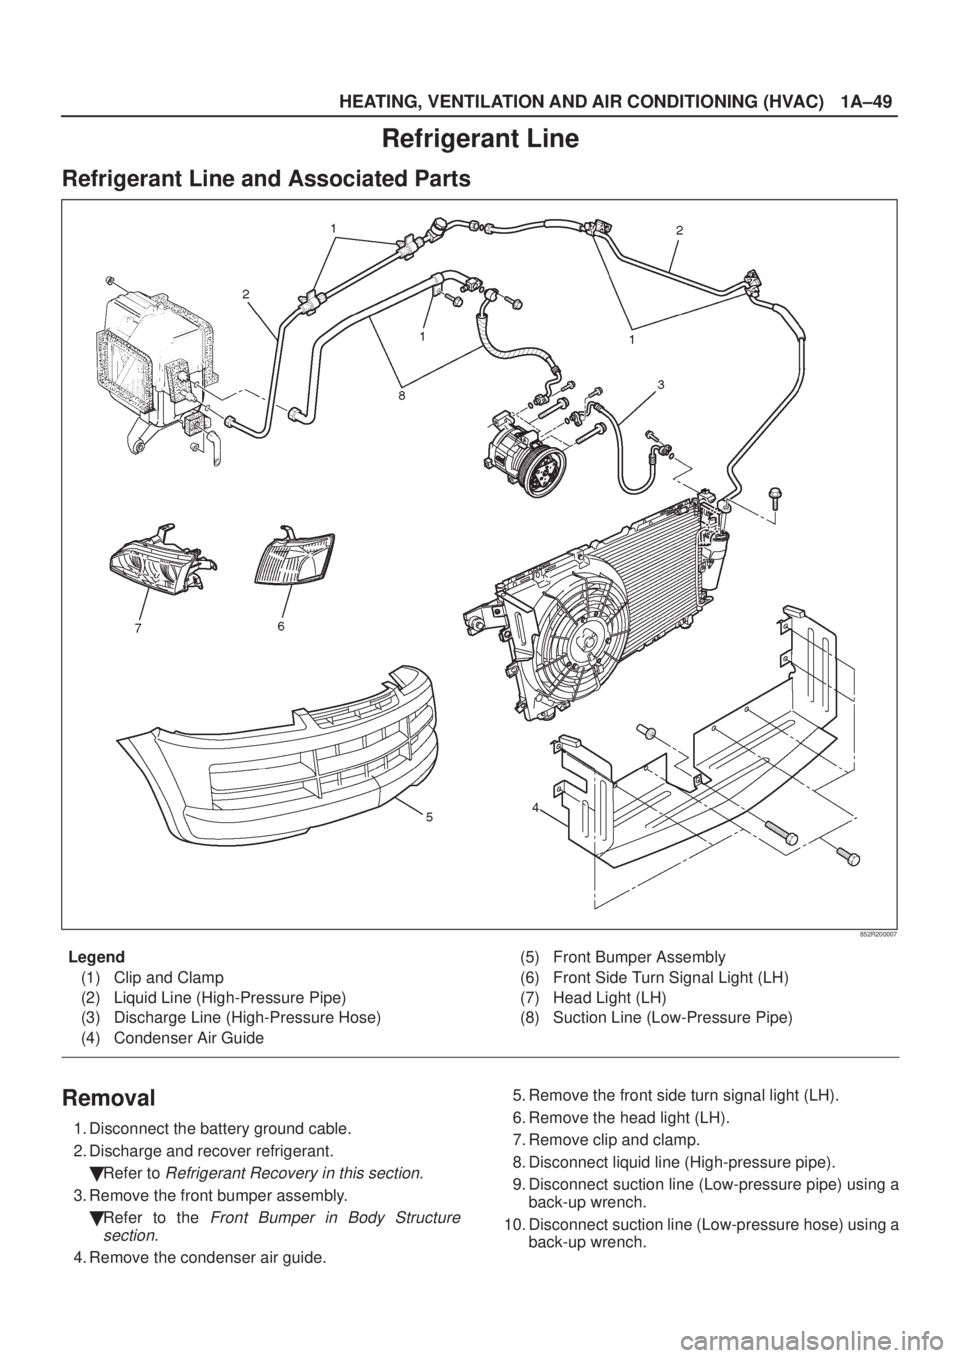 ISUZU AXIOM 2002  Service Manual PDF HEATING, VENTILATION AND AIR CONDITIONING (HVAC)
1A±49
Refrigerant Line
Refrigerant Line and Associated Parts
852R200007
Legend
(1) Clip and Clamp
(2) Liquid Line (High-Pressure Pipe)
(3) Discharge L